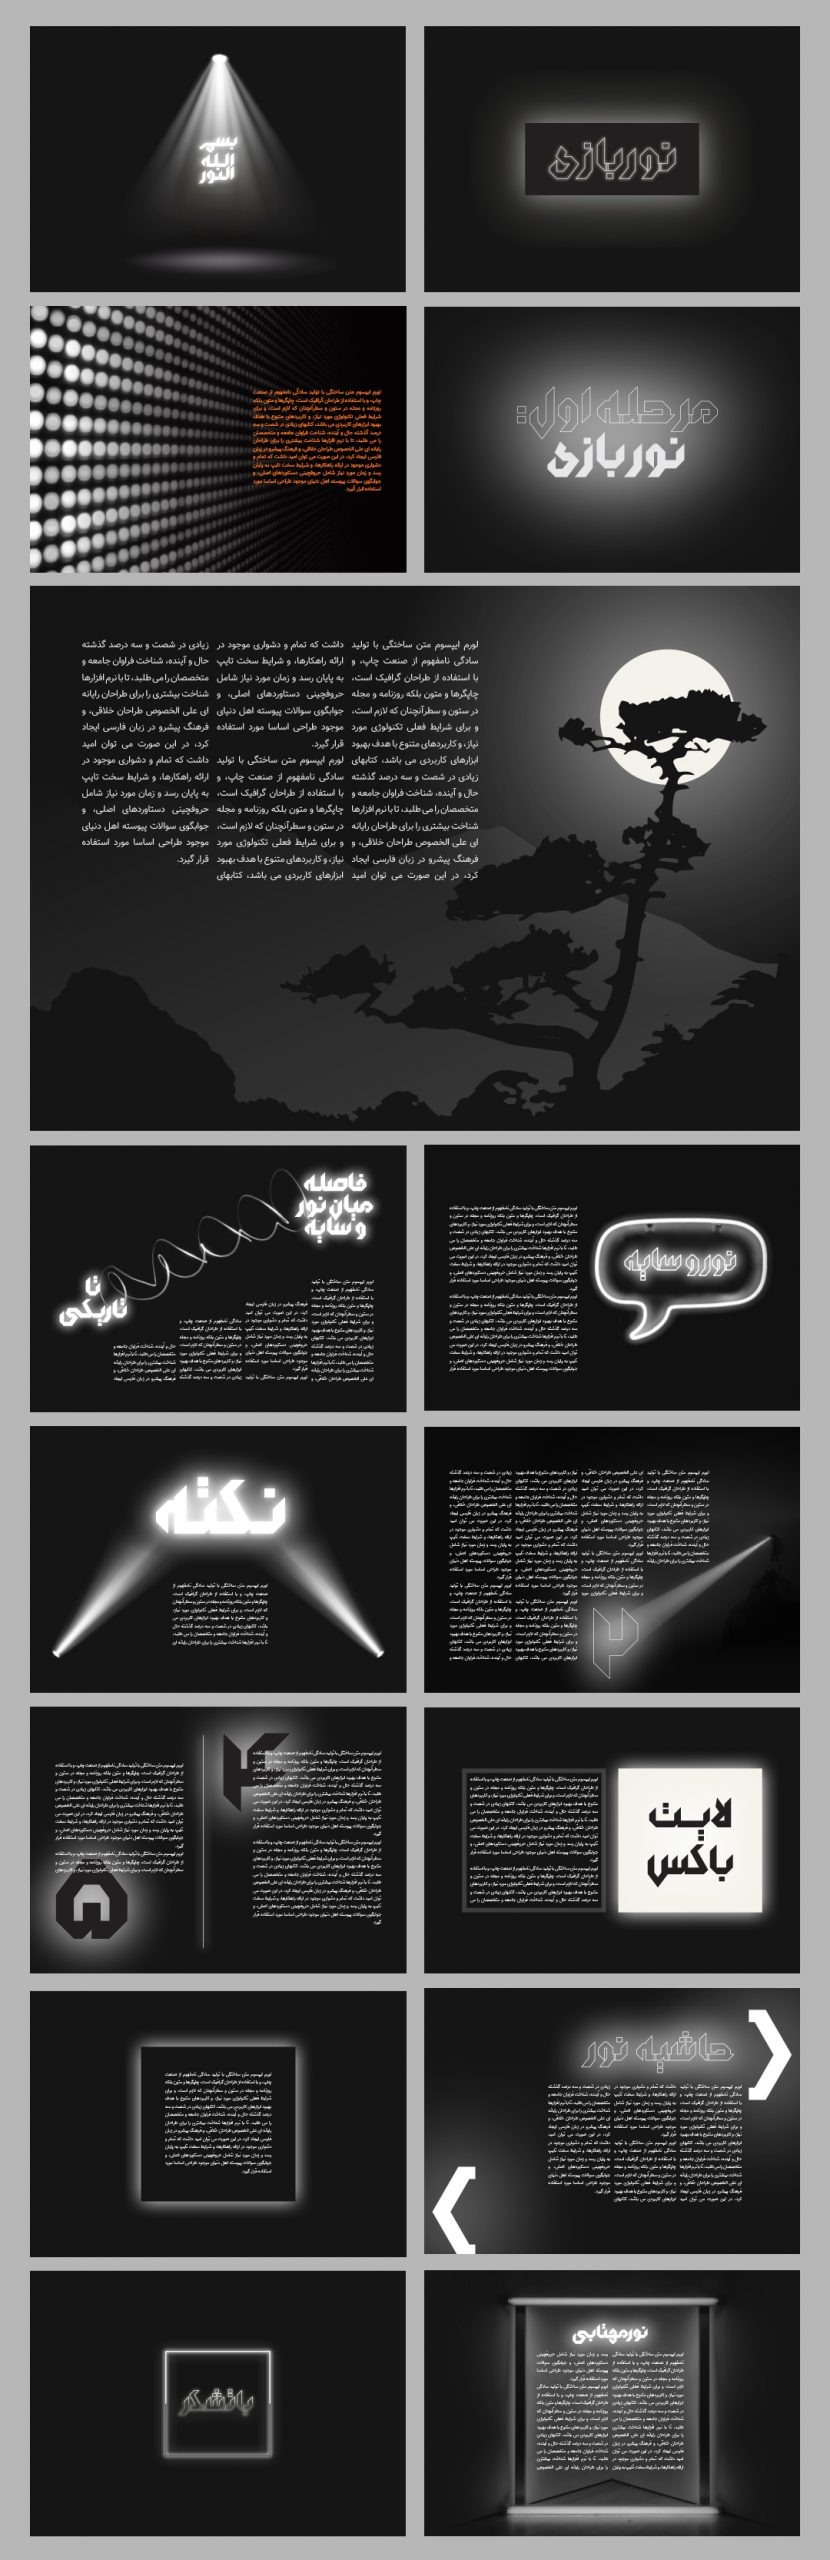 mohsen hashemi graphic designer designer freelancer creative art directo personal website portfolio iraniinan professional hashemi layout design cataloge brochure report magazine mag design